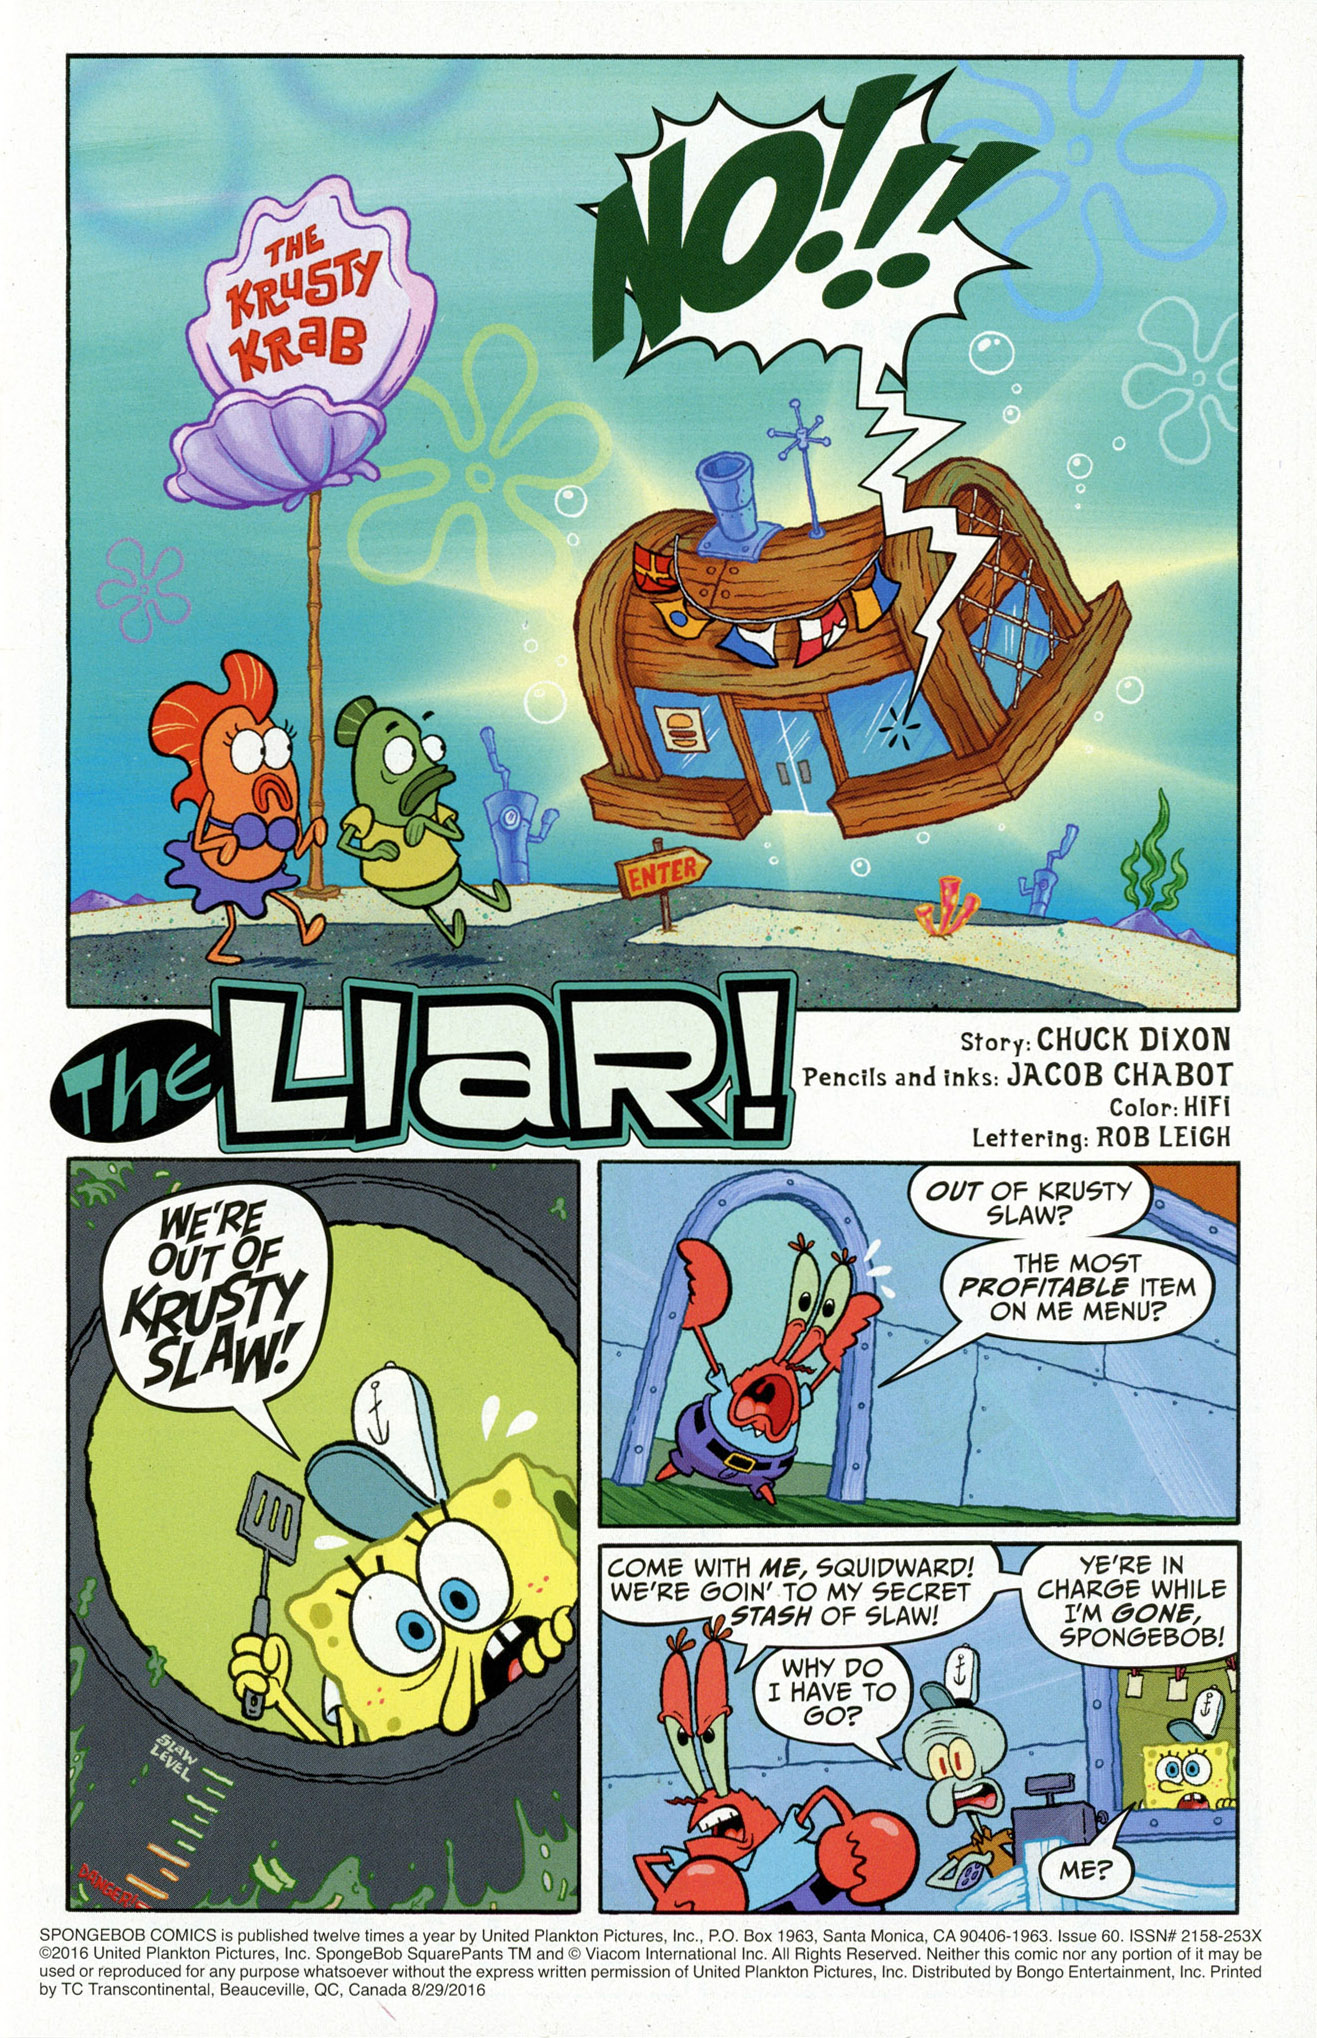 SpongeBob Comics (2011-): Chapter 60 - Page 3